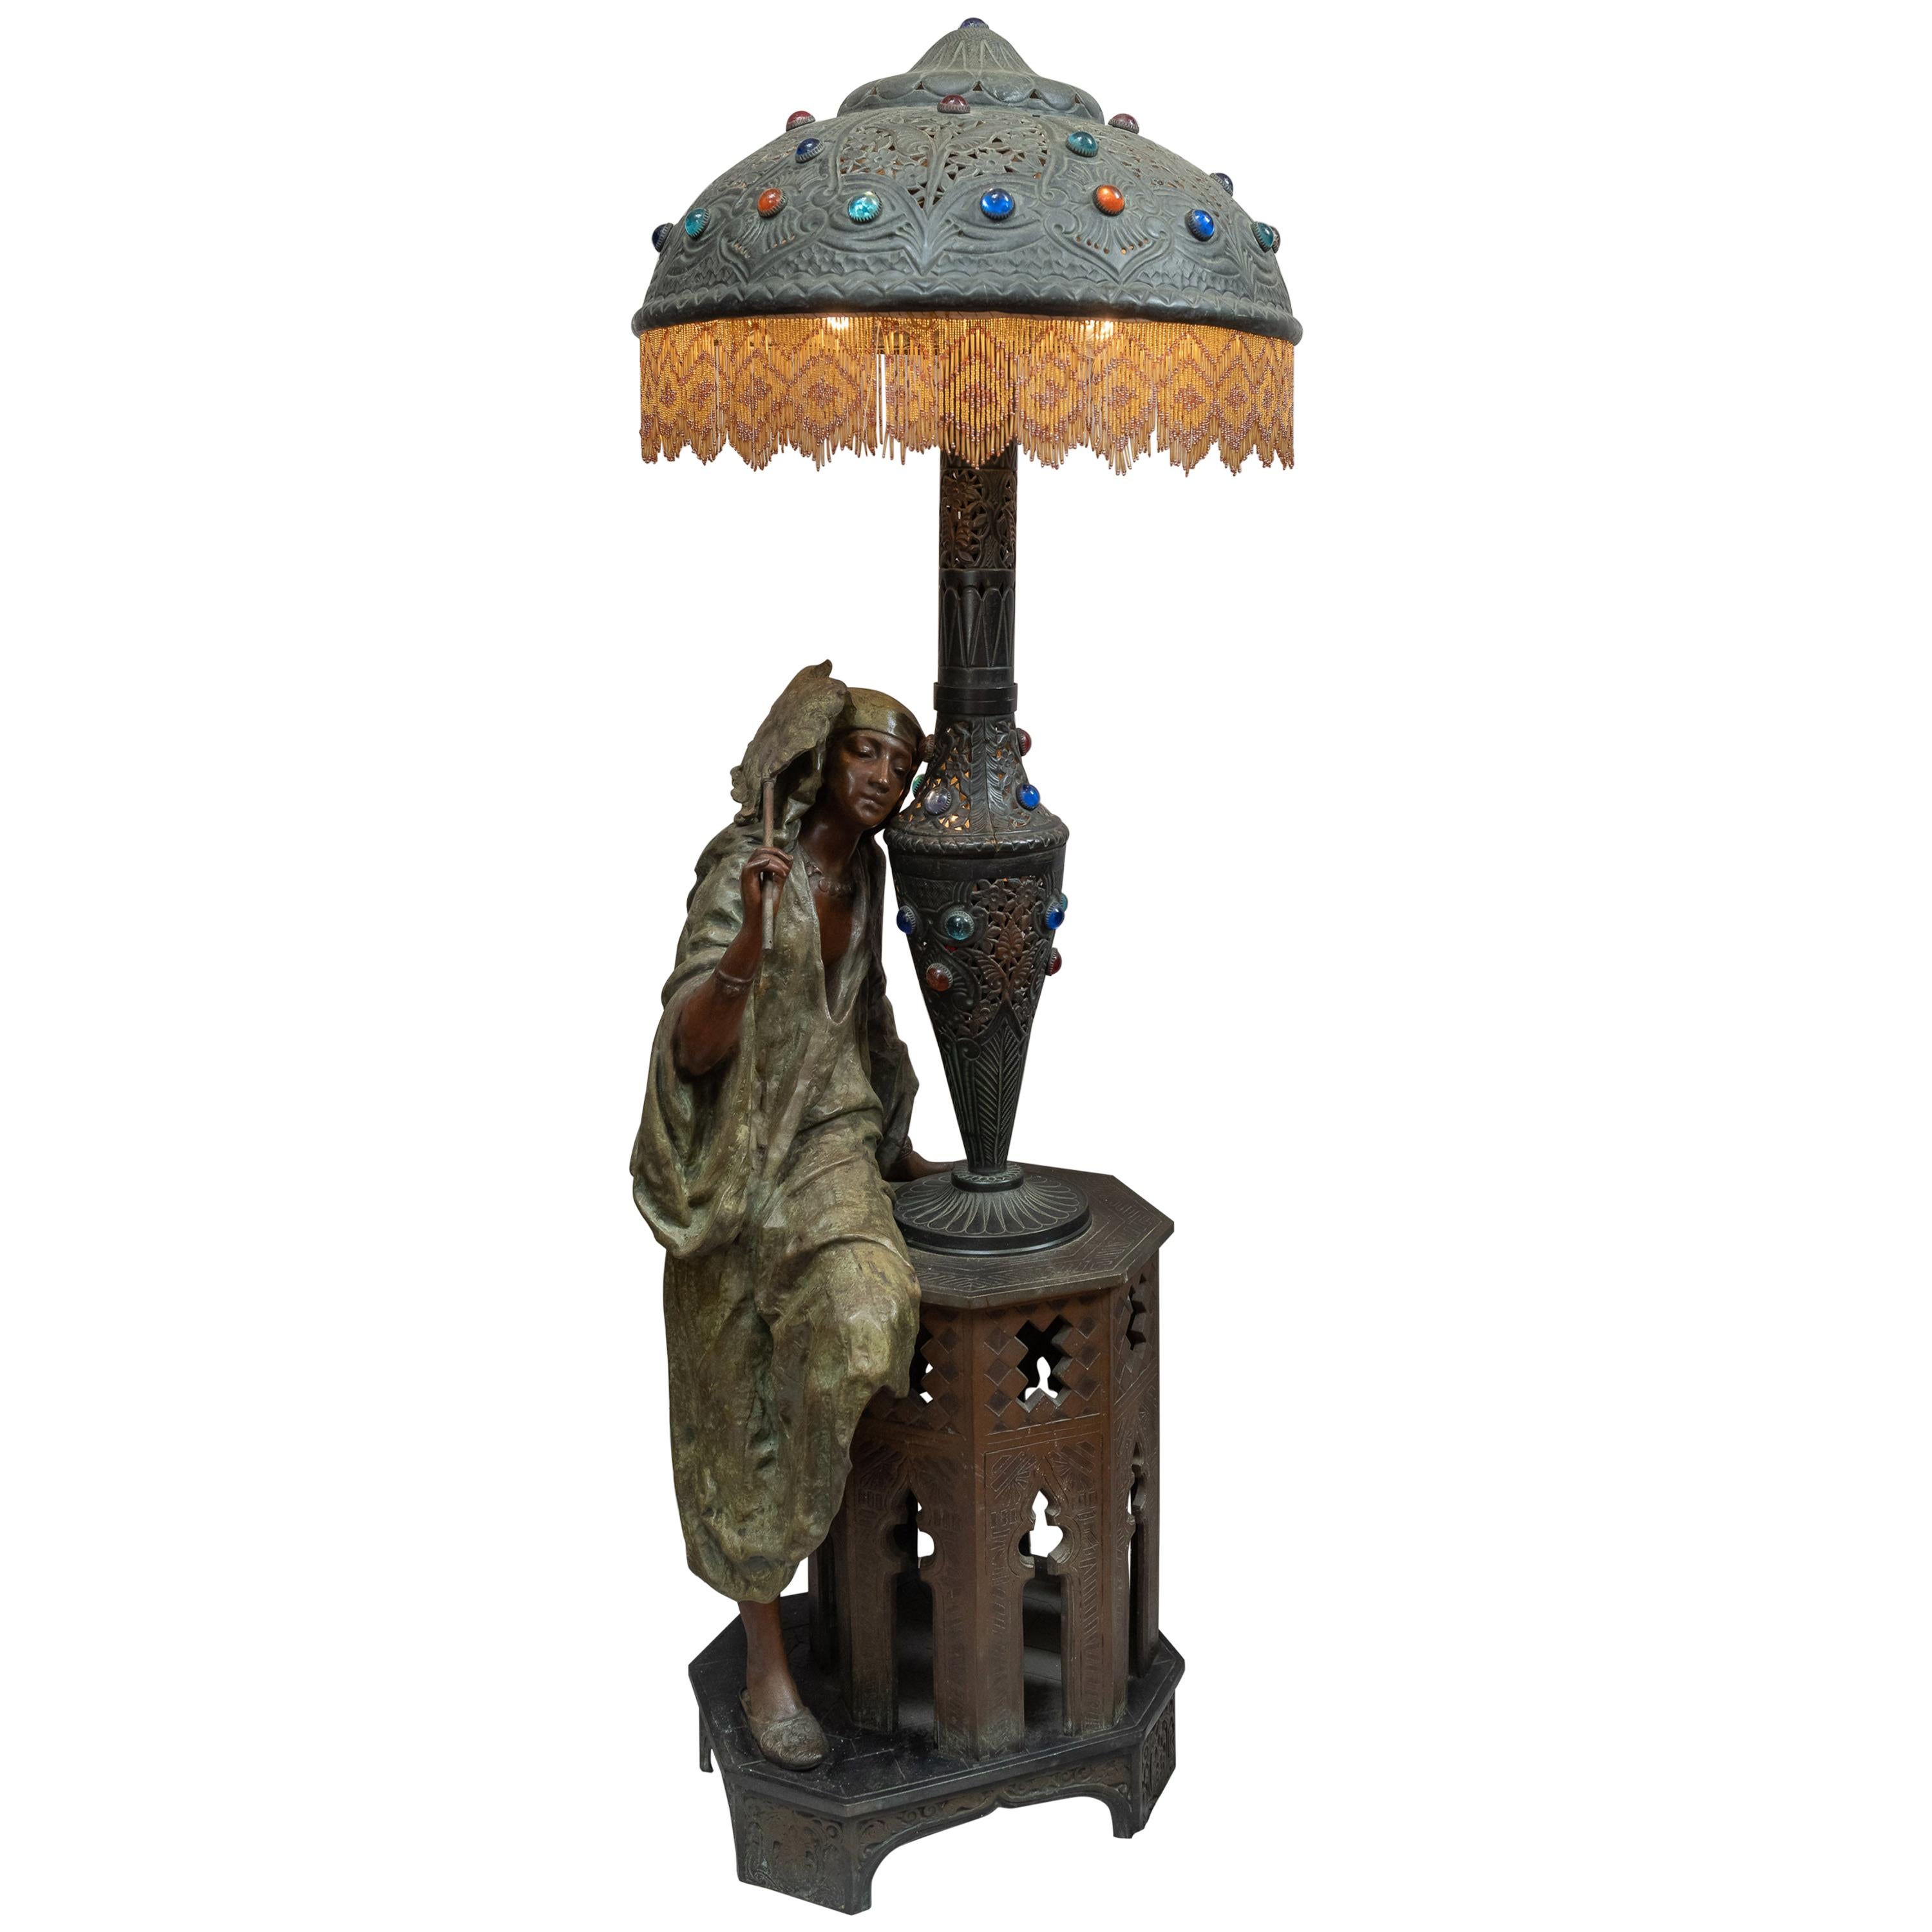 Huge Orientalist Theme Statue / Lamp w/Arab Woman Under a Brass Shade w/ Jewels